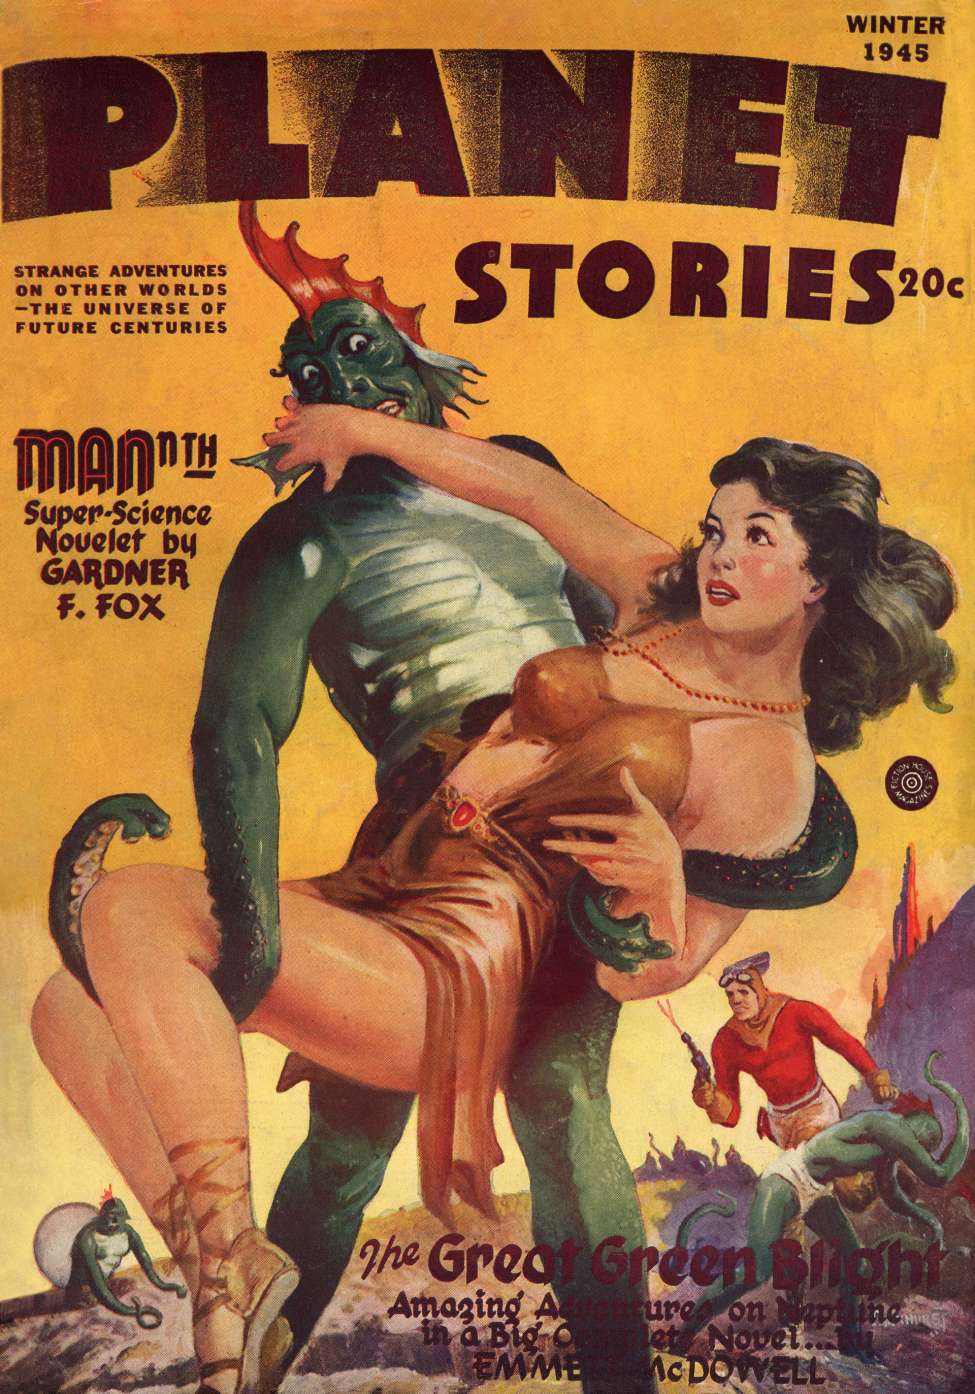 Comic Book Cover For Planet Stories v3 1 - The Great Green Blight - Emmett McDowell